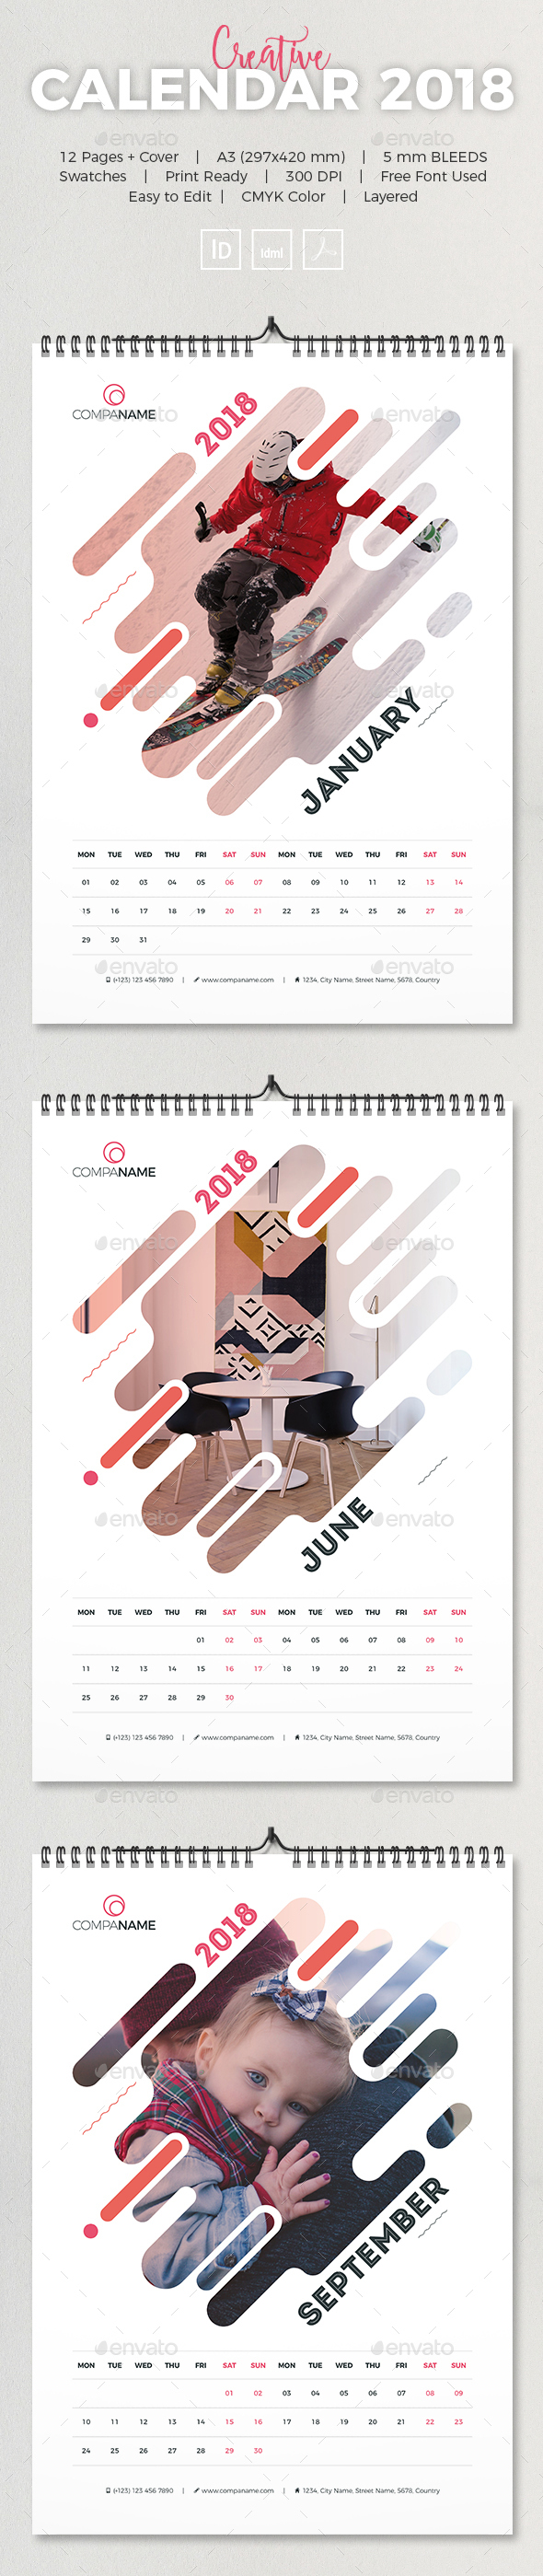 Creative Calendar 2018